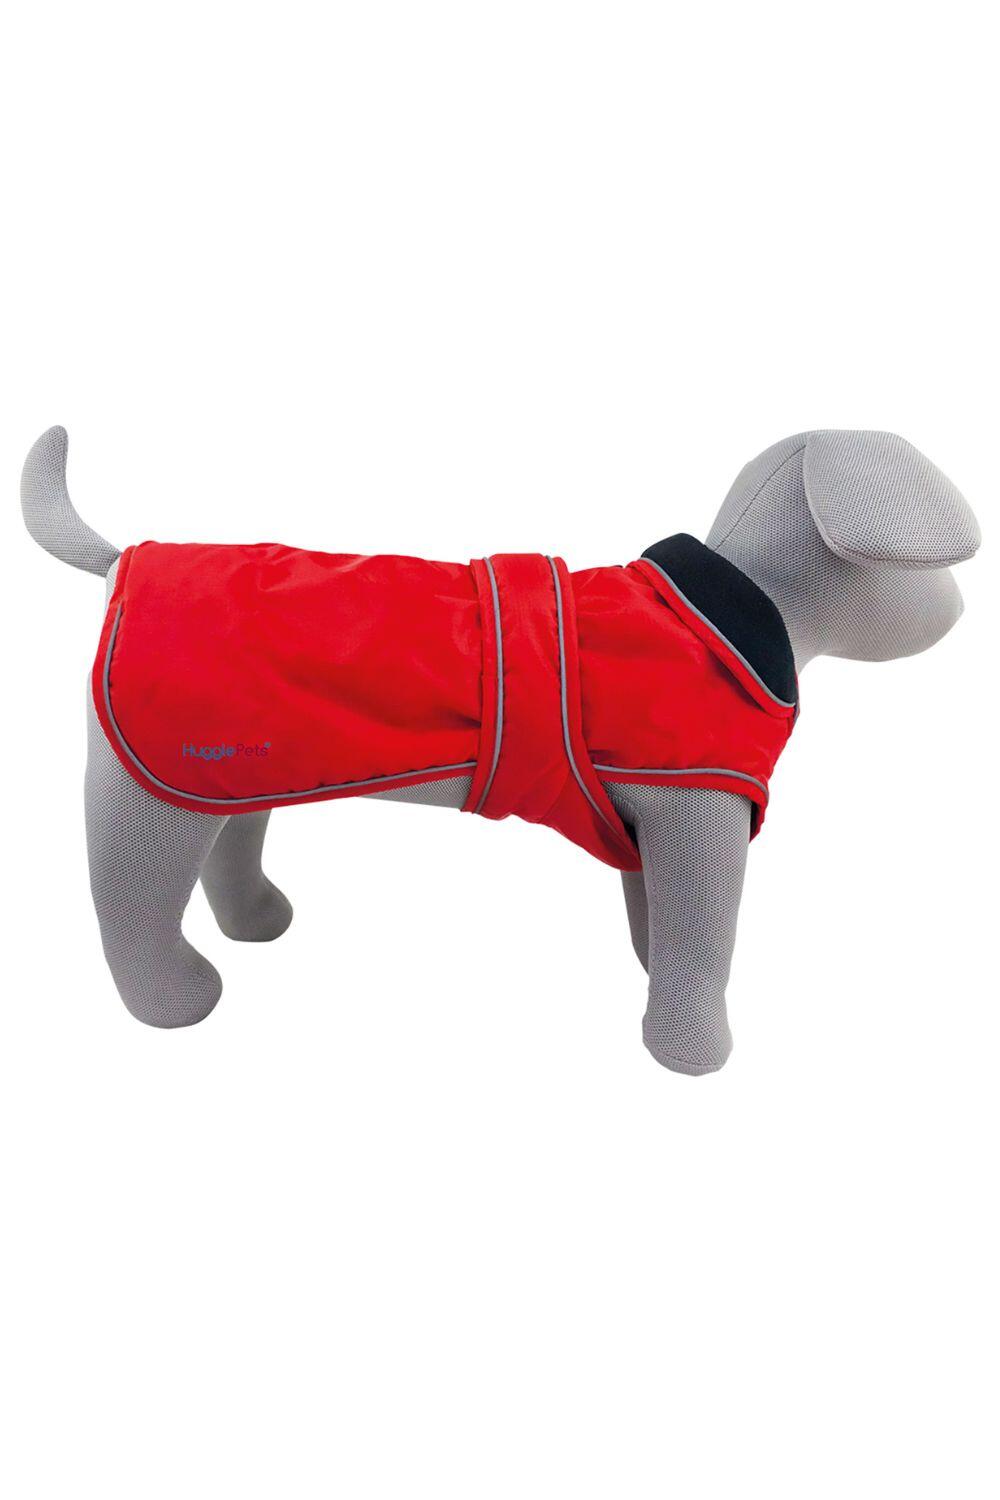 HugglePets Arctic Armour Dog Coat 1/7